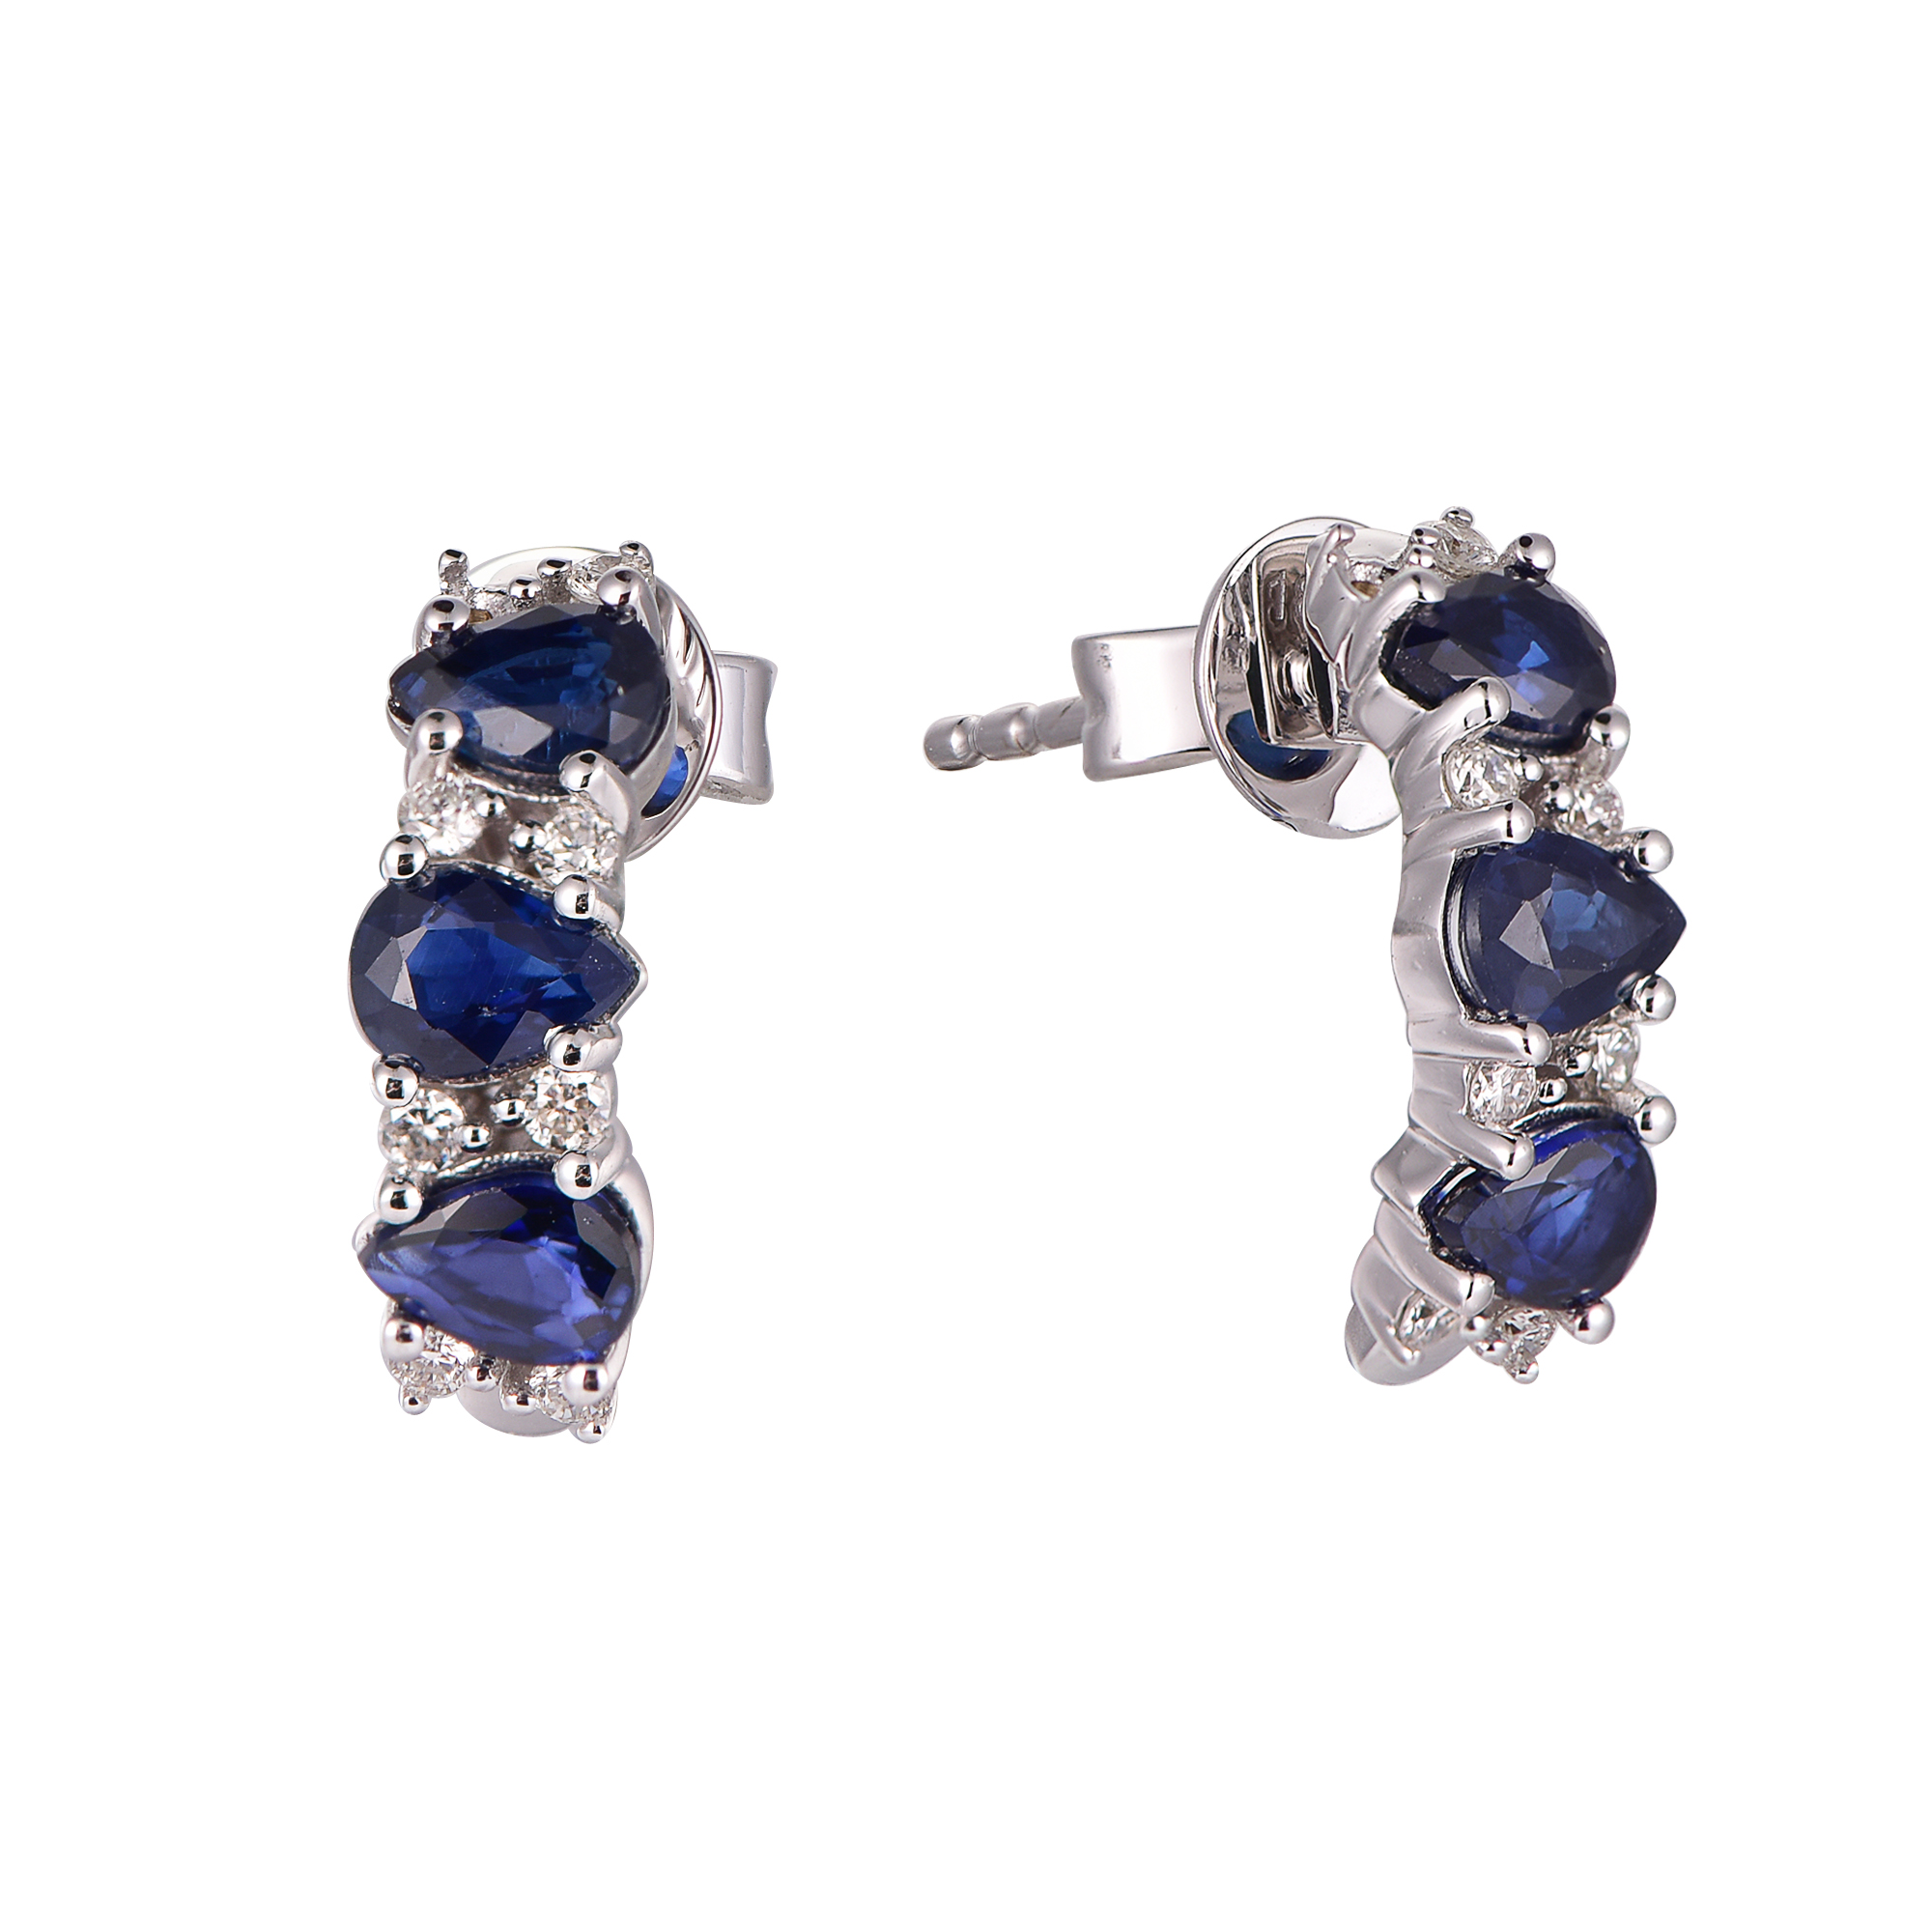 DI45579E 18K white gold blue sapphire earrings